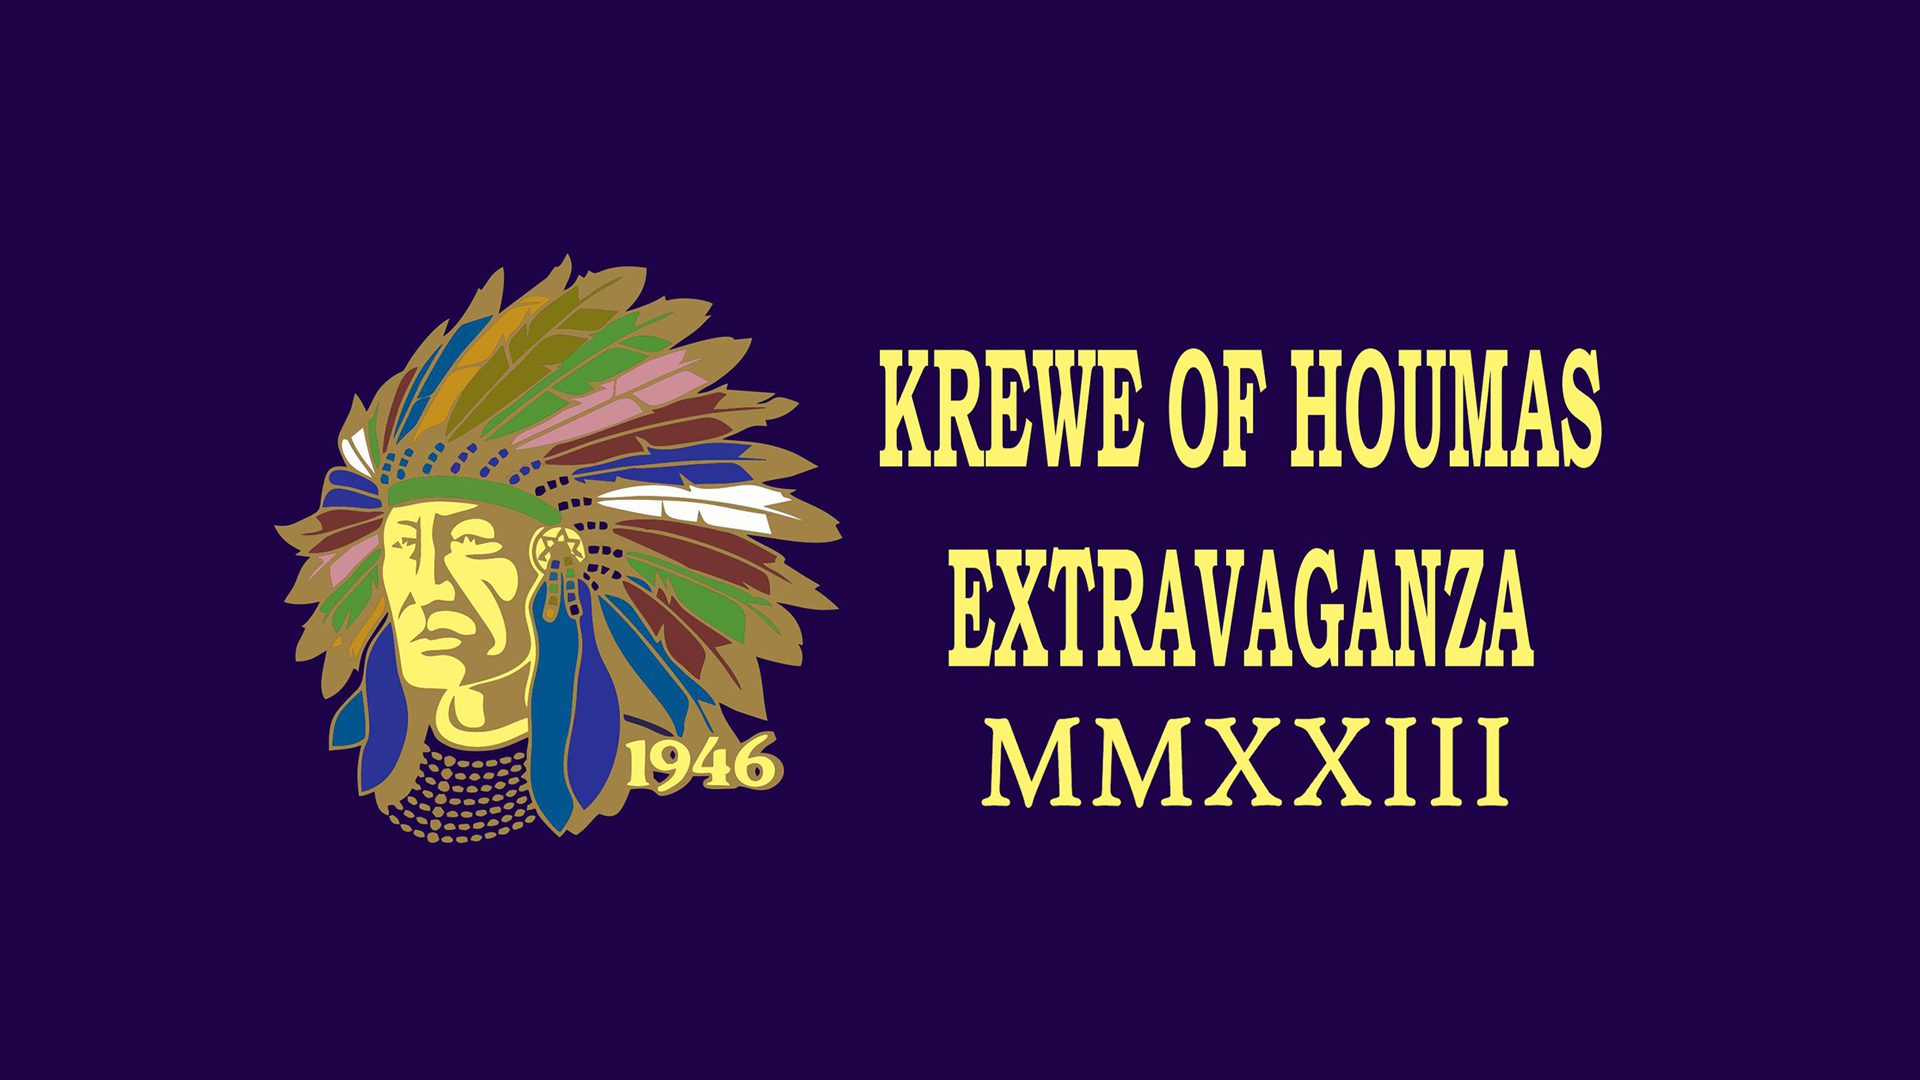 Krewe of Houma Extravaganza MMXXIII